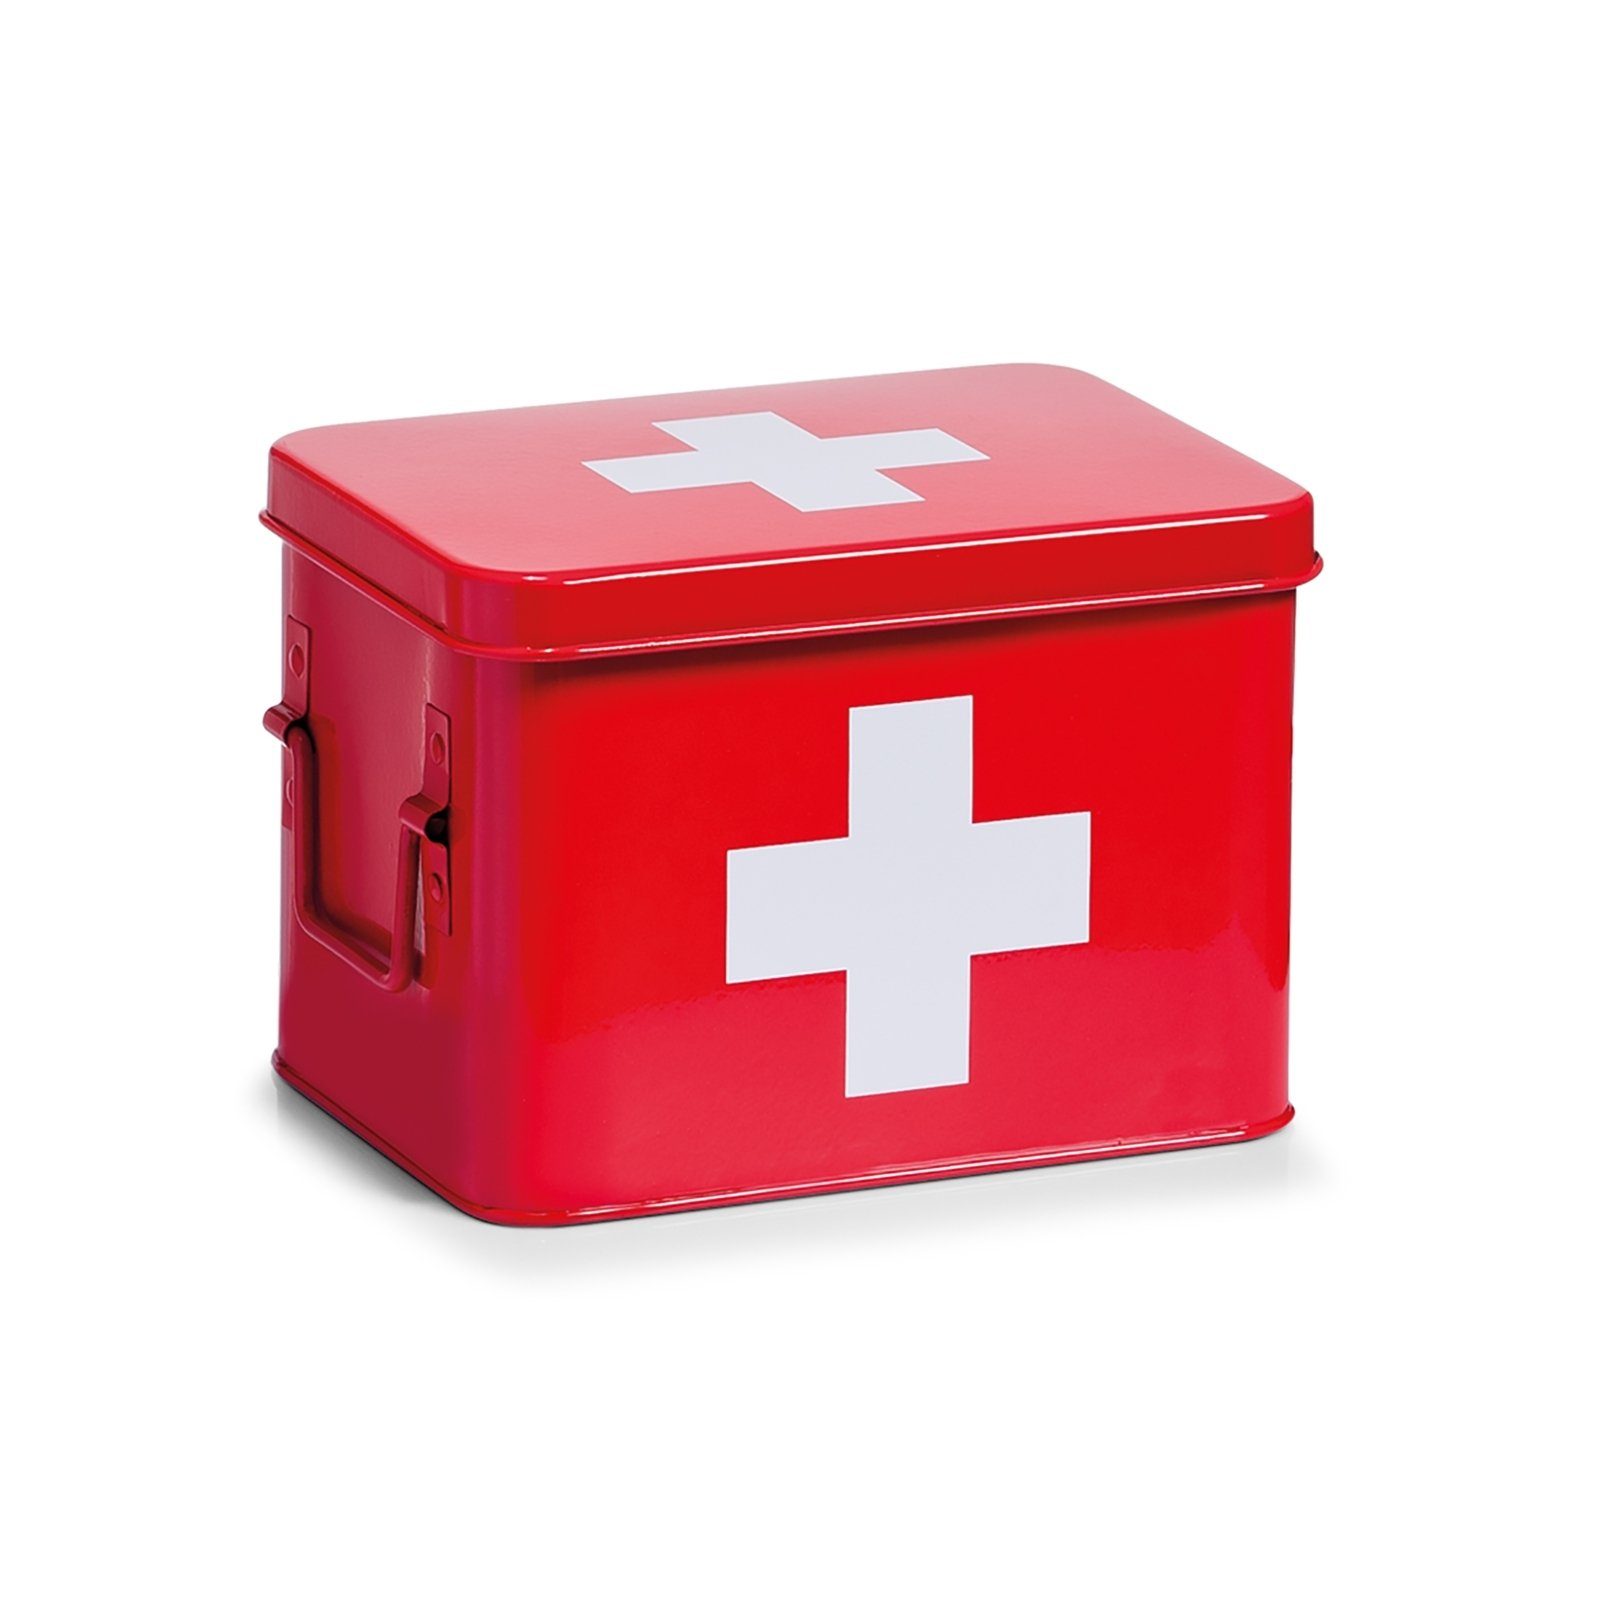 Verbandskasten Metall Present Rot Zeller Medizinbox Medizinschrank